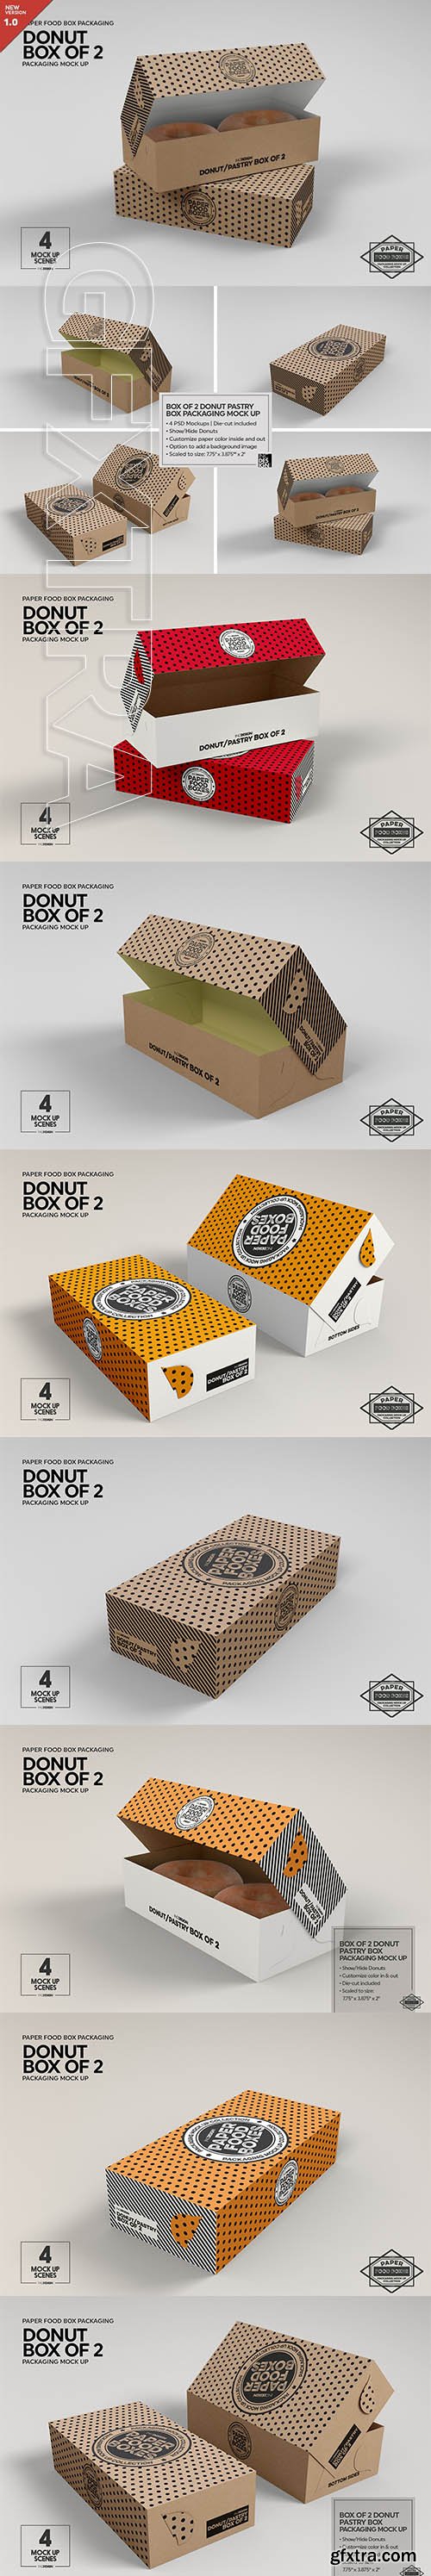 CreativeMarket - Box of Two Donut Pastry Box Mockup 2899792